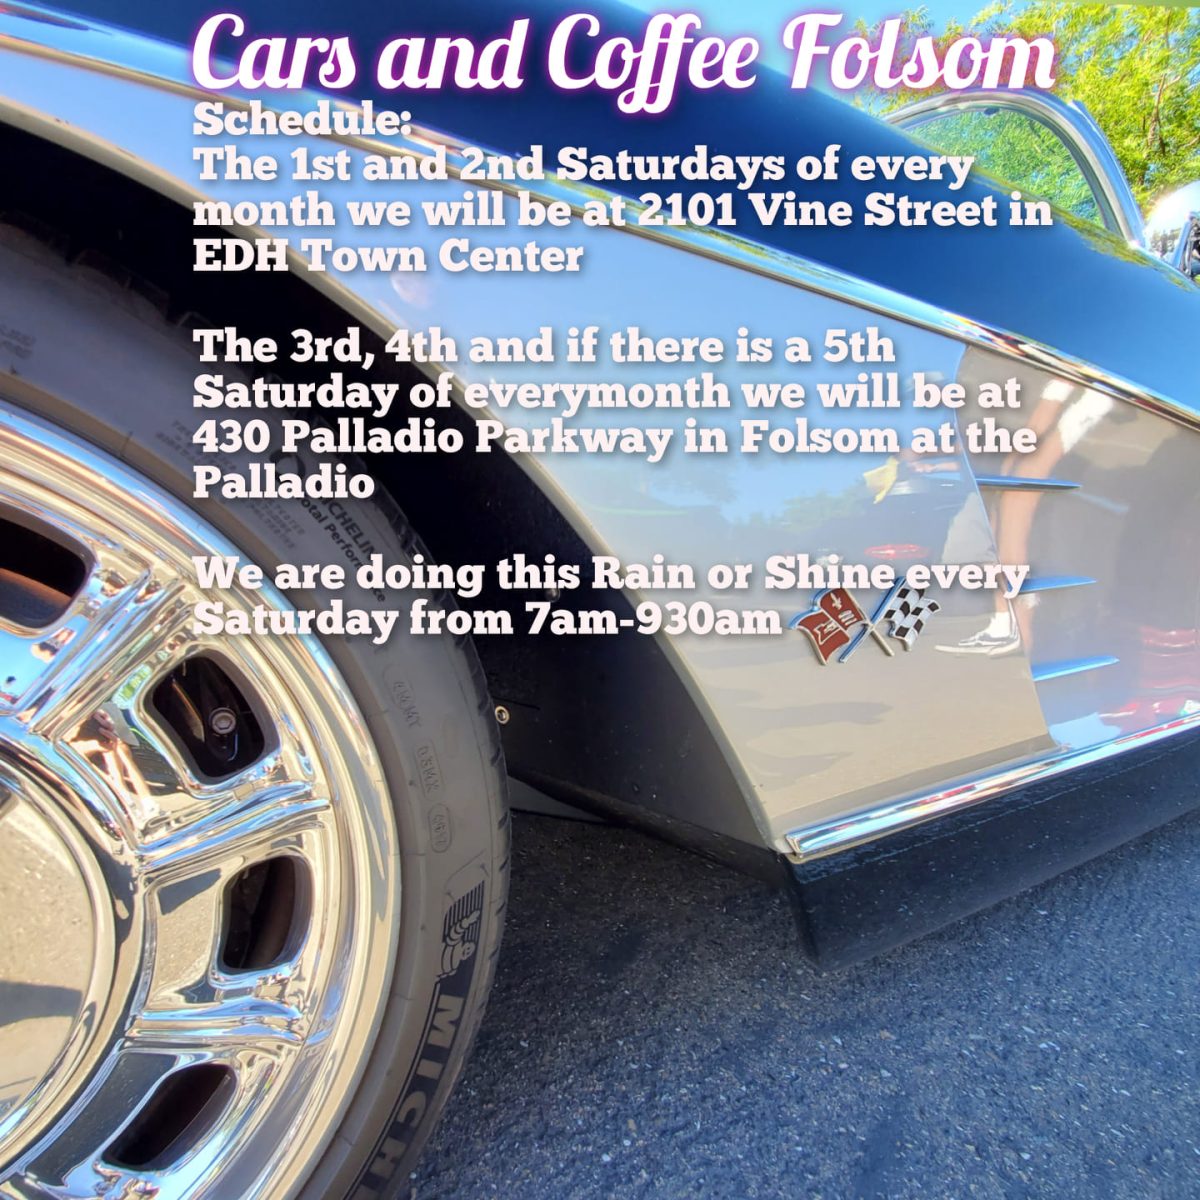 Cars and Coffee Folsom